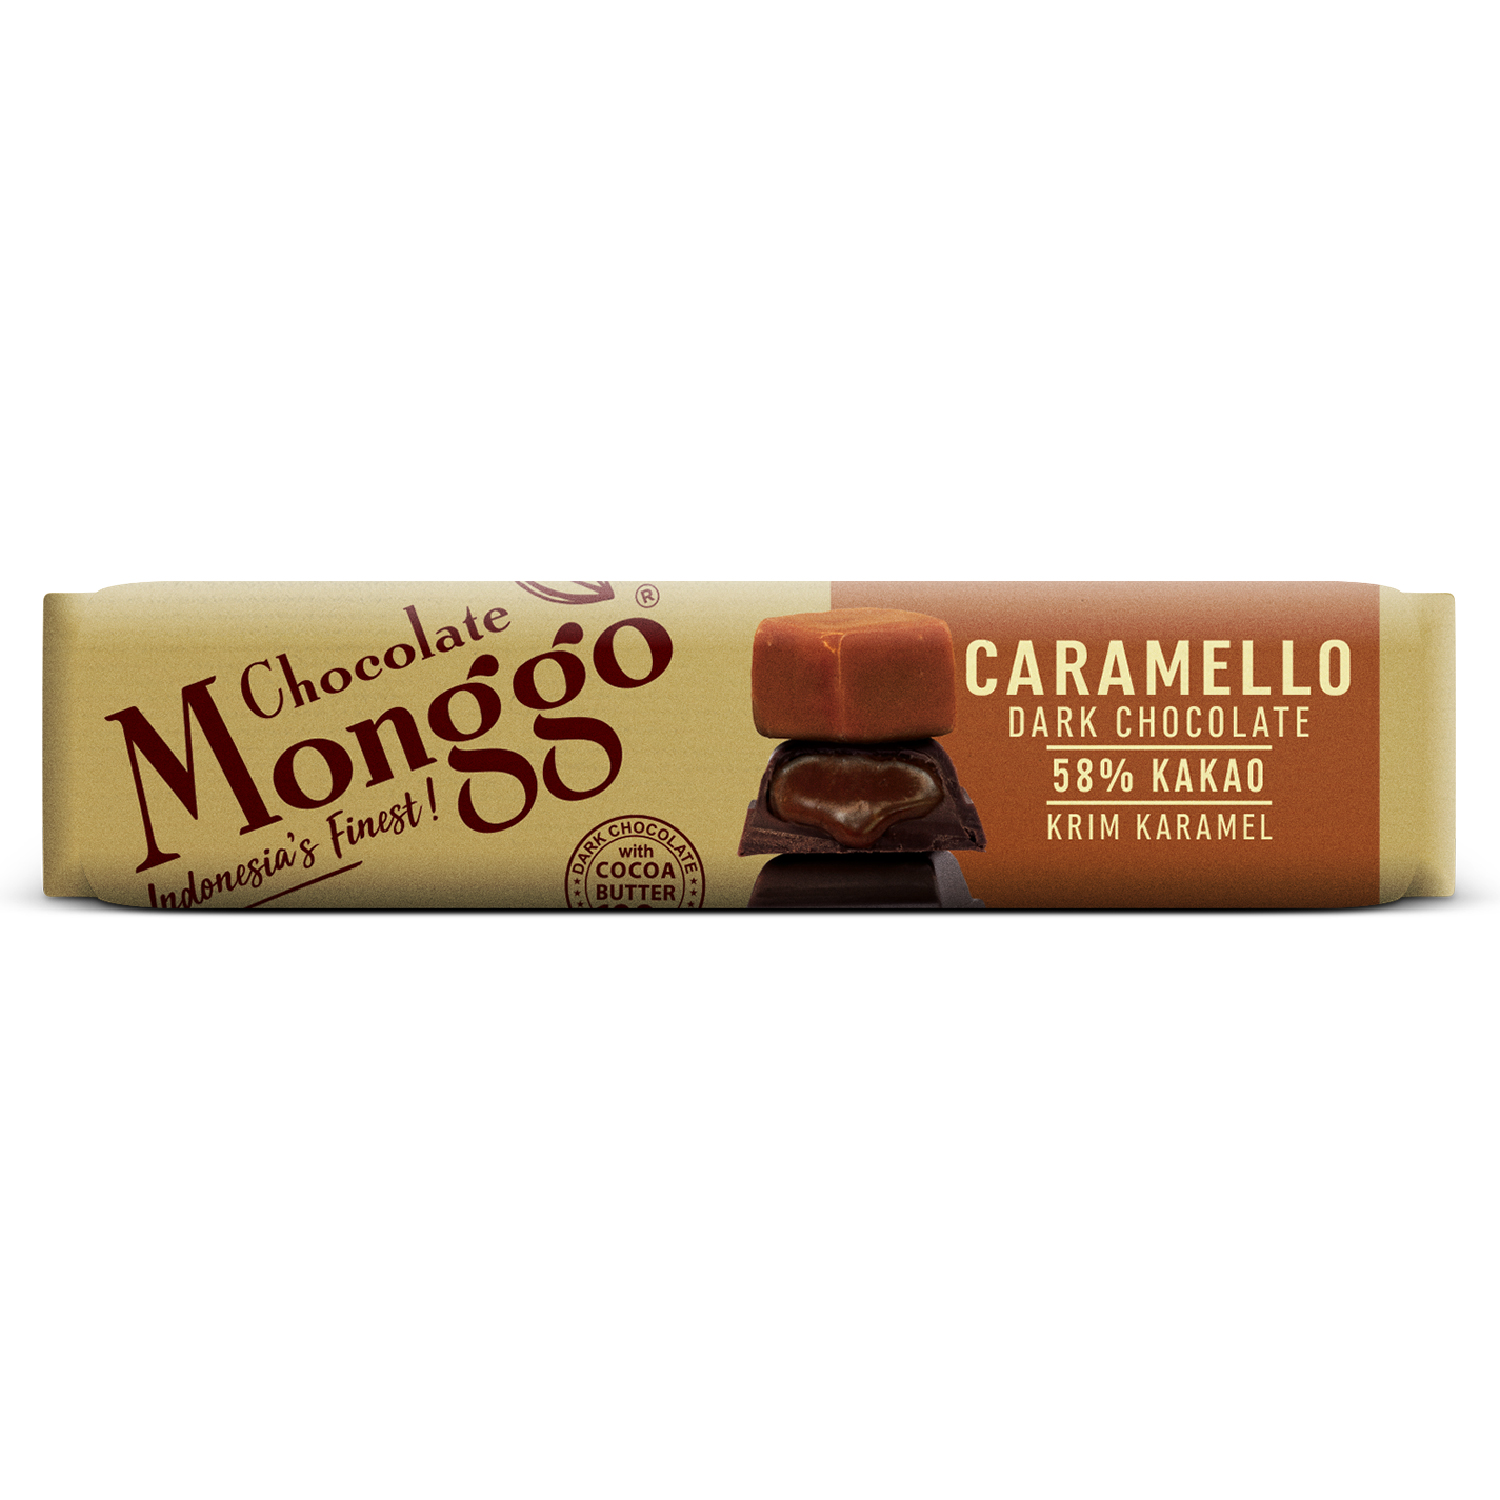 CHOCOLATE BAR WITH CARAMELLO